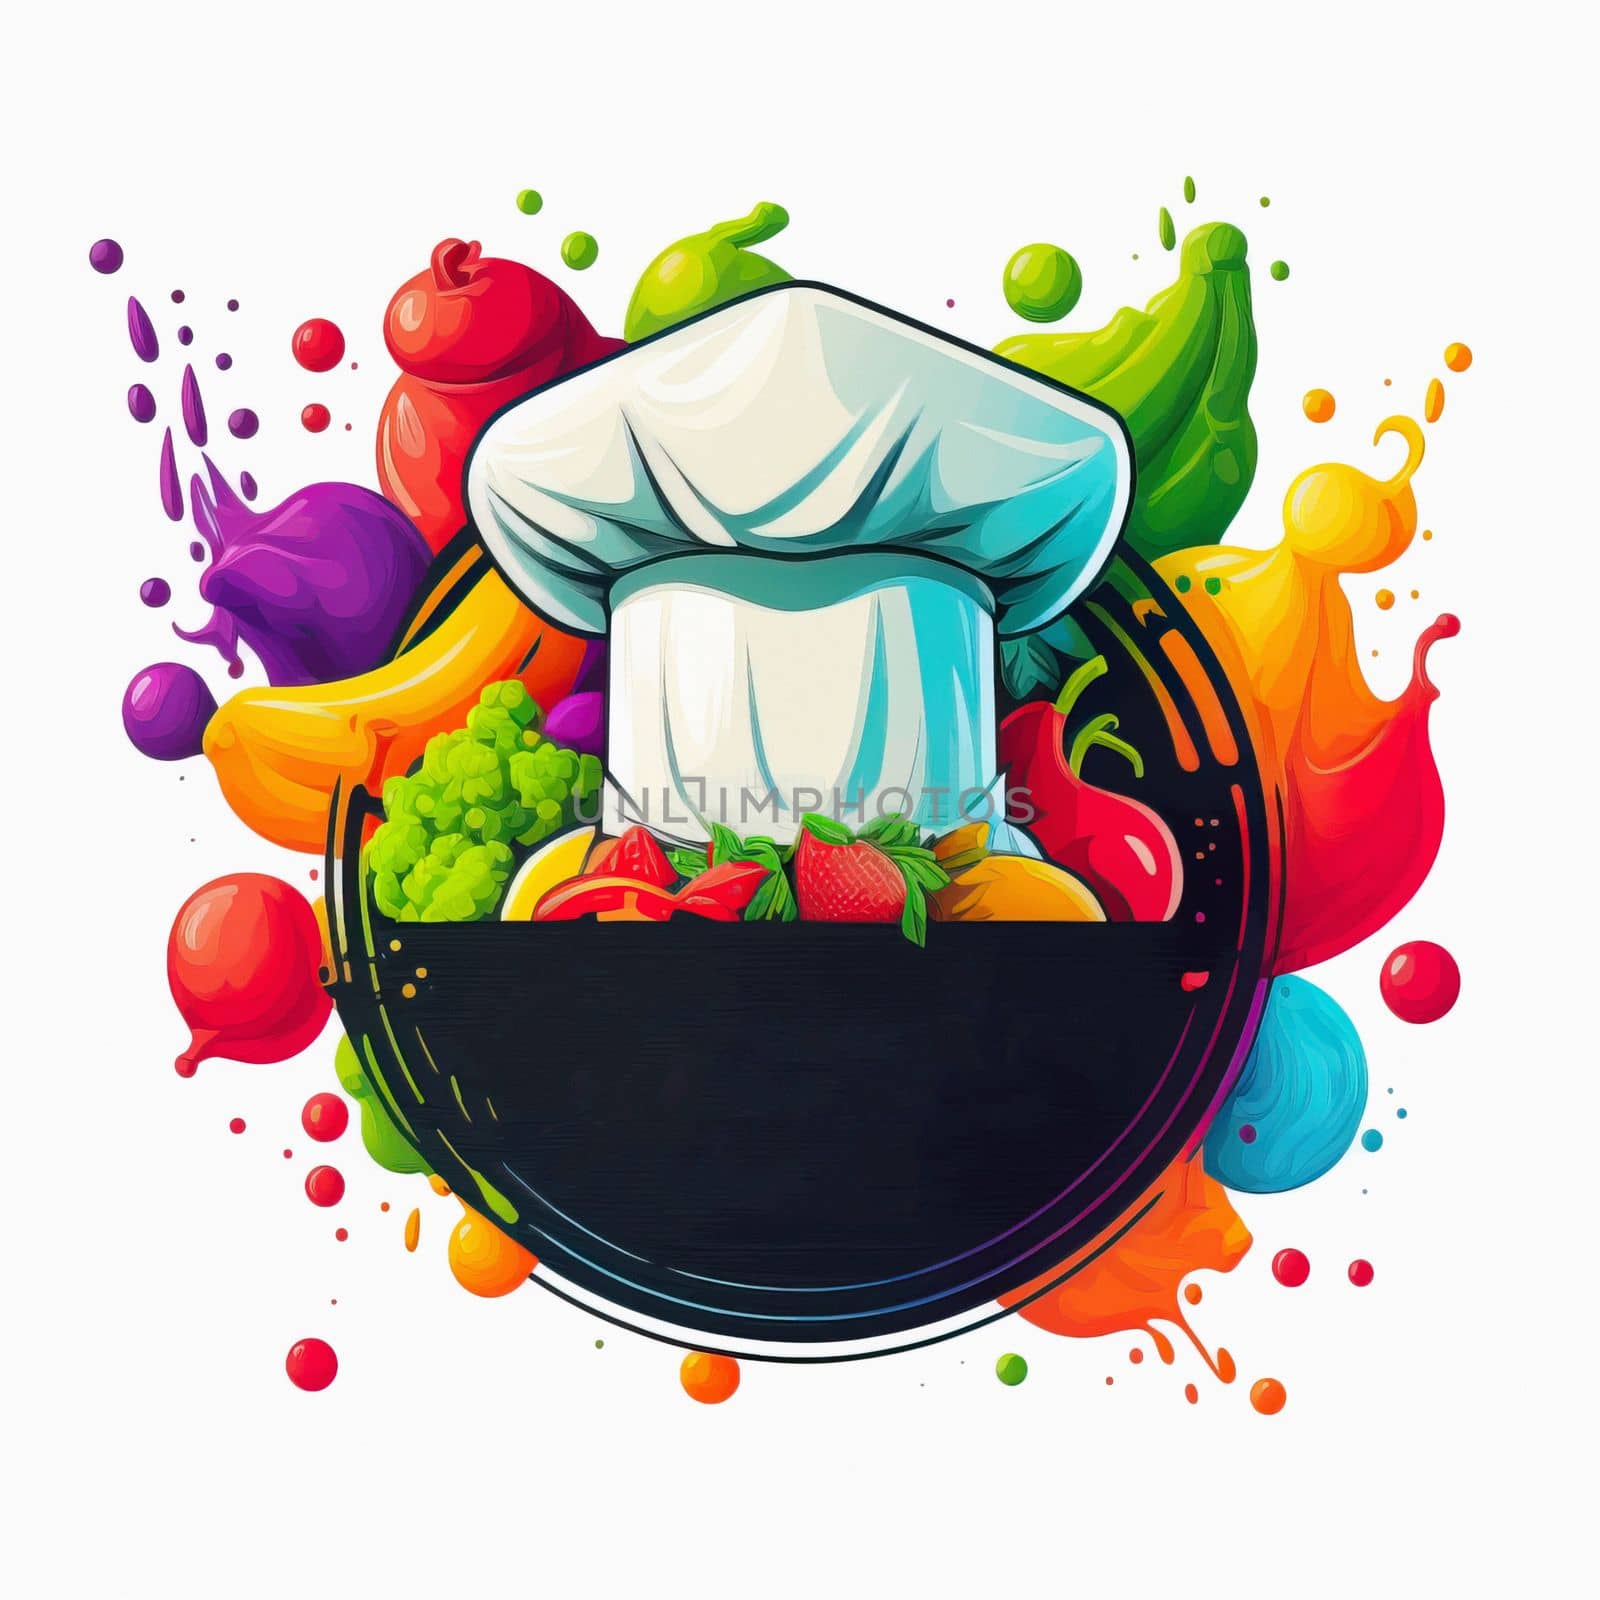 Company logo or channel logo. cartoon logo chefs on white background by igor010